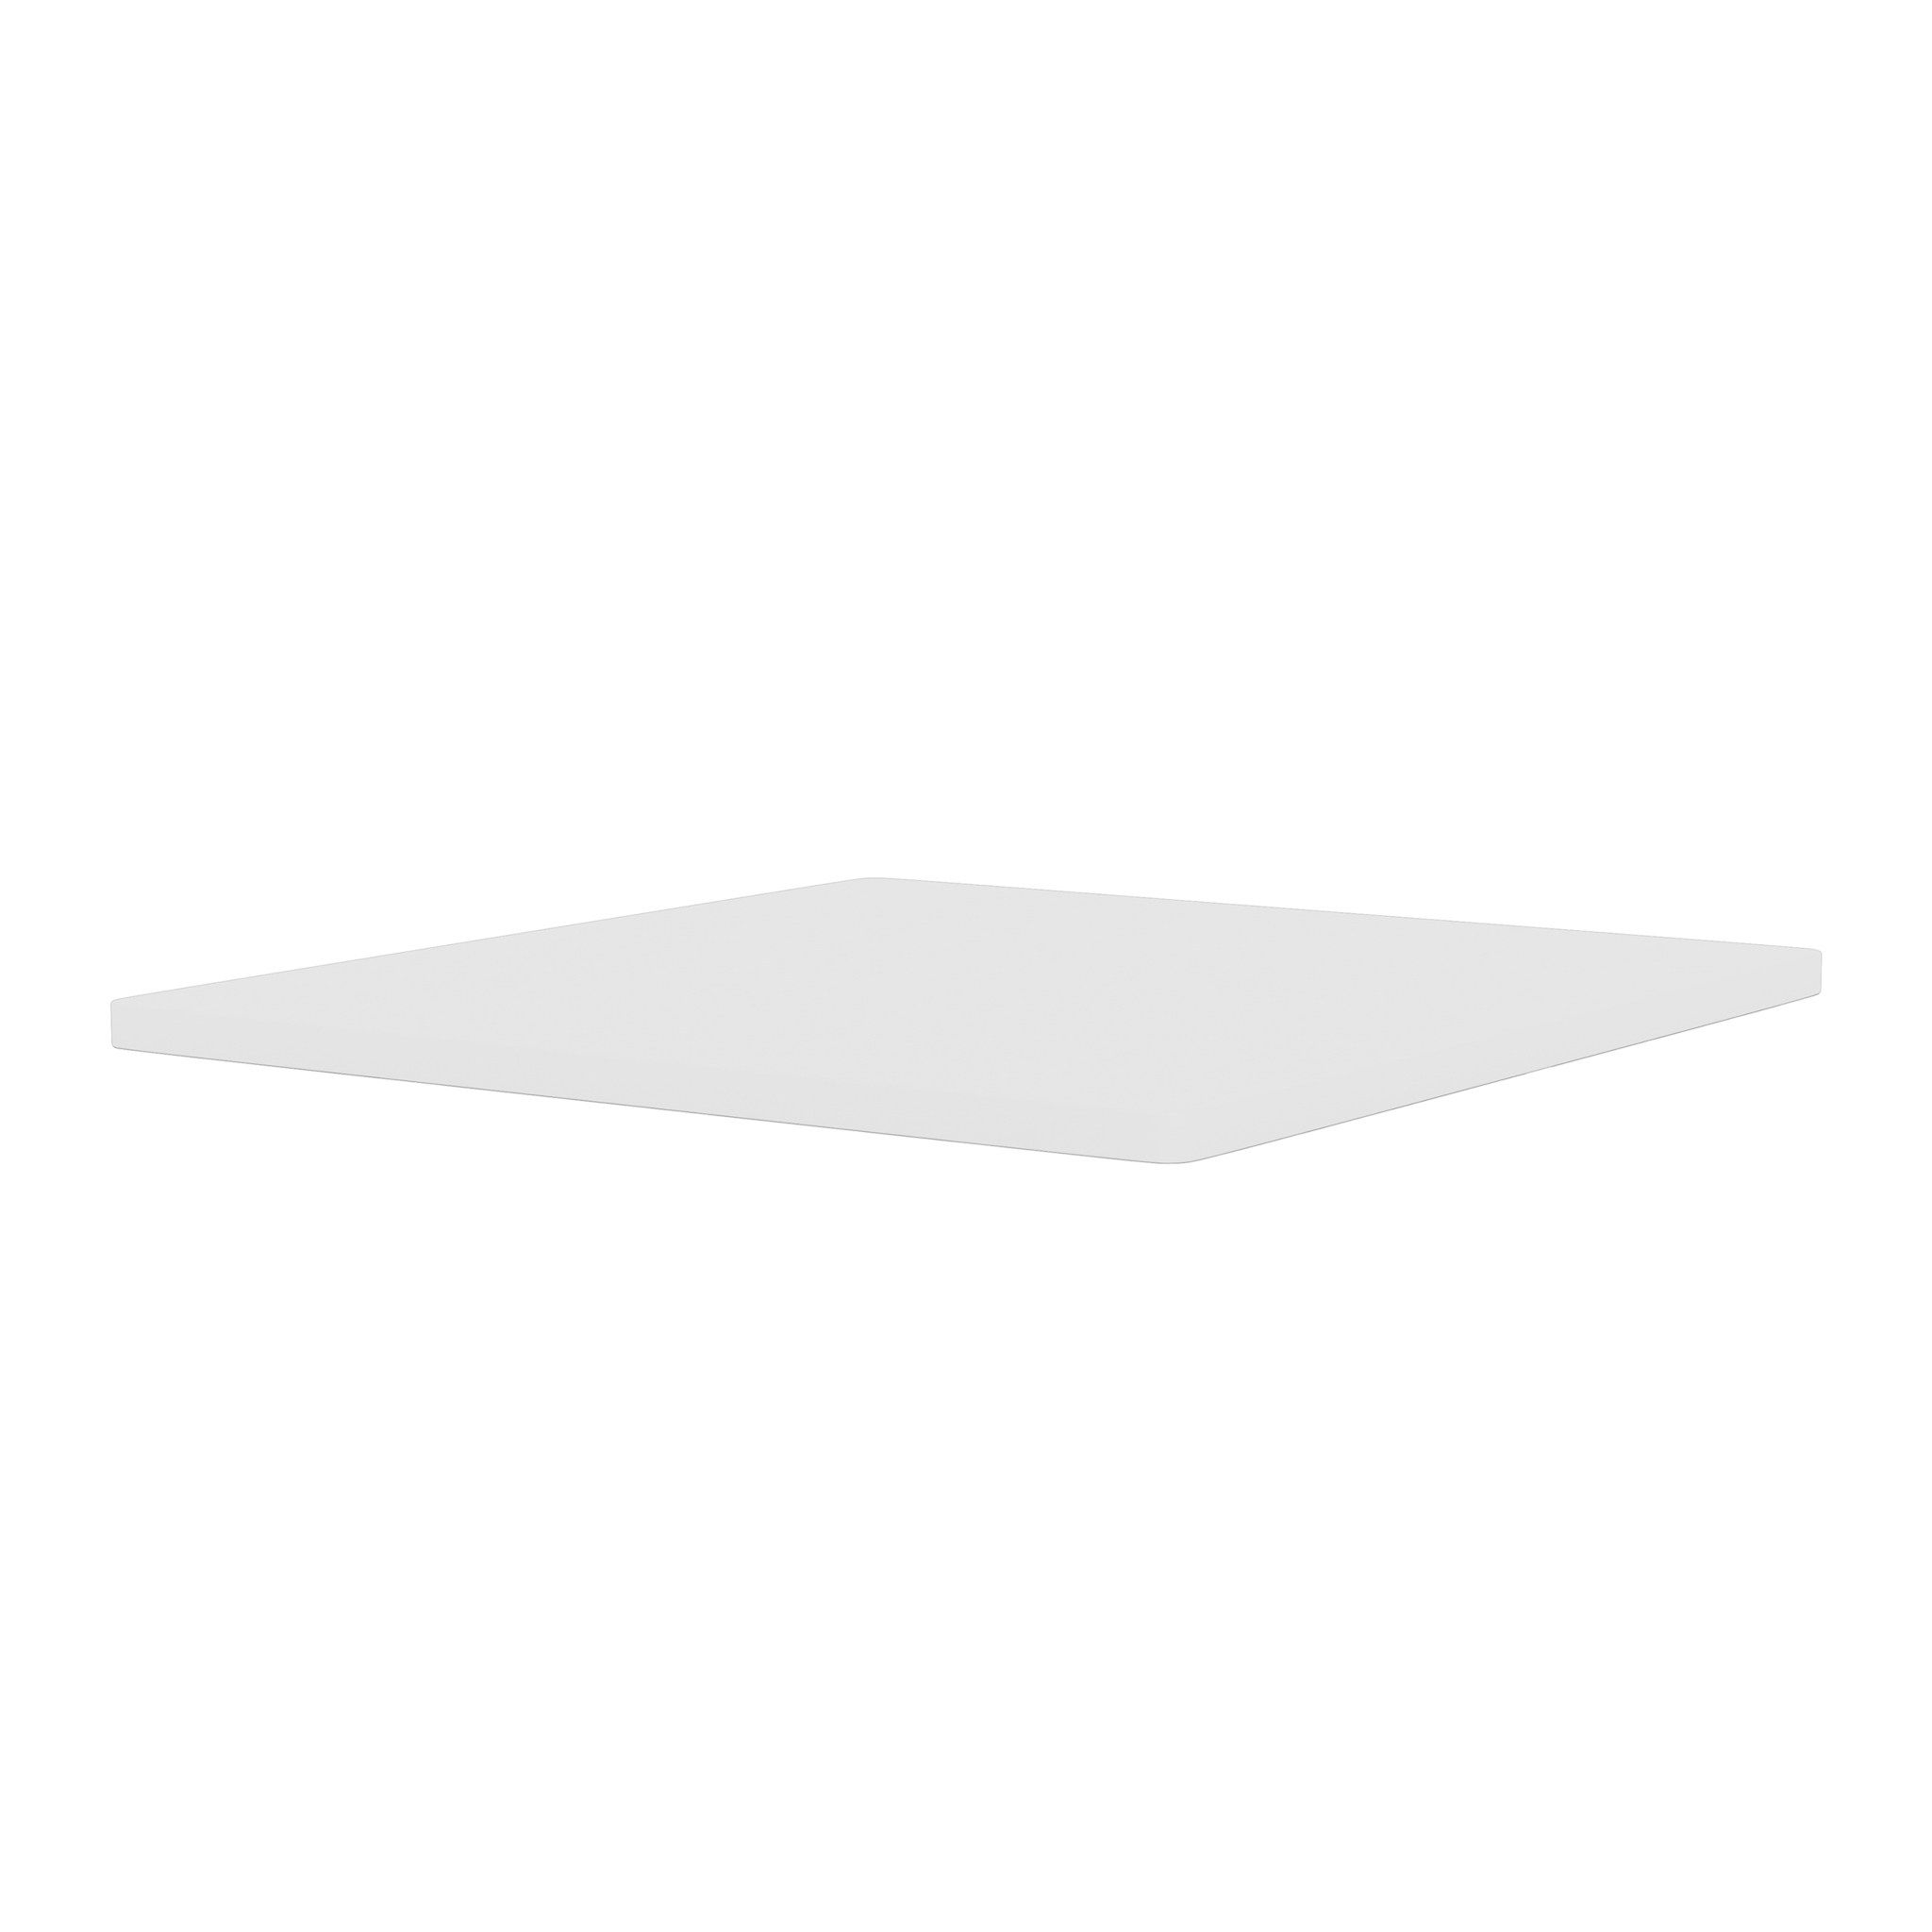 MONTANA // PANTON WIRE SINGLE ABDECKPLATTE - TIEFE 35cm | 101 NEW WHITE